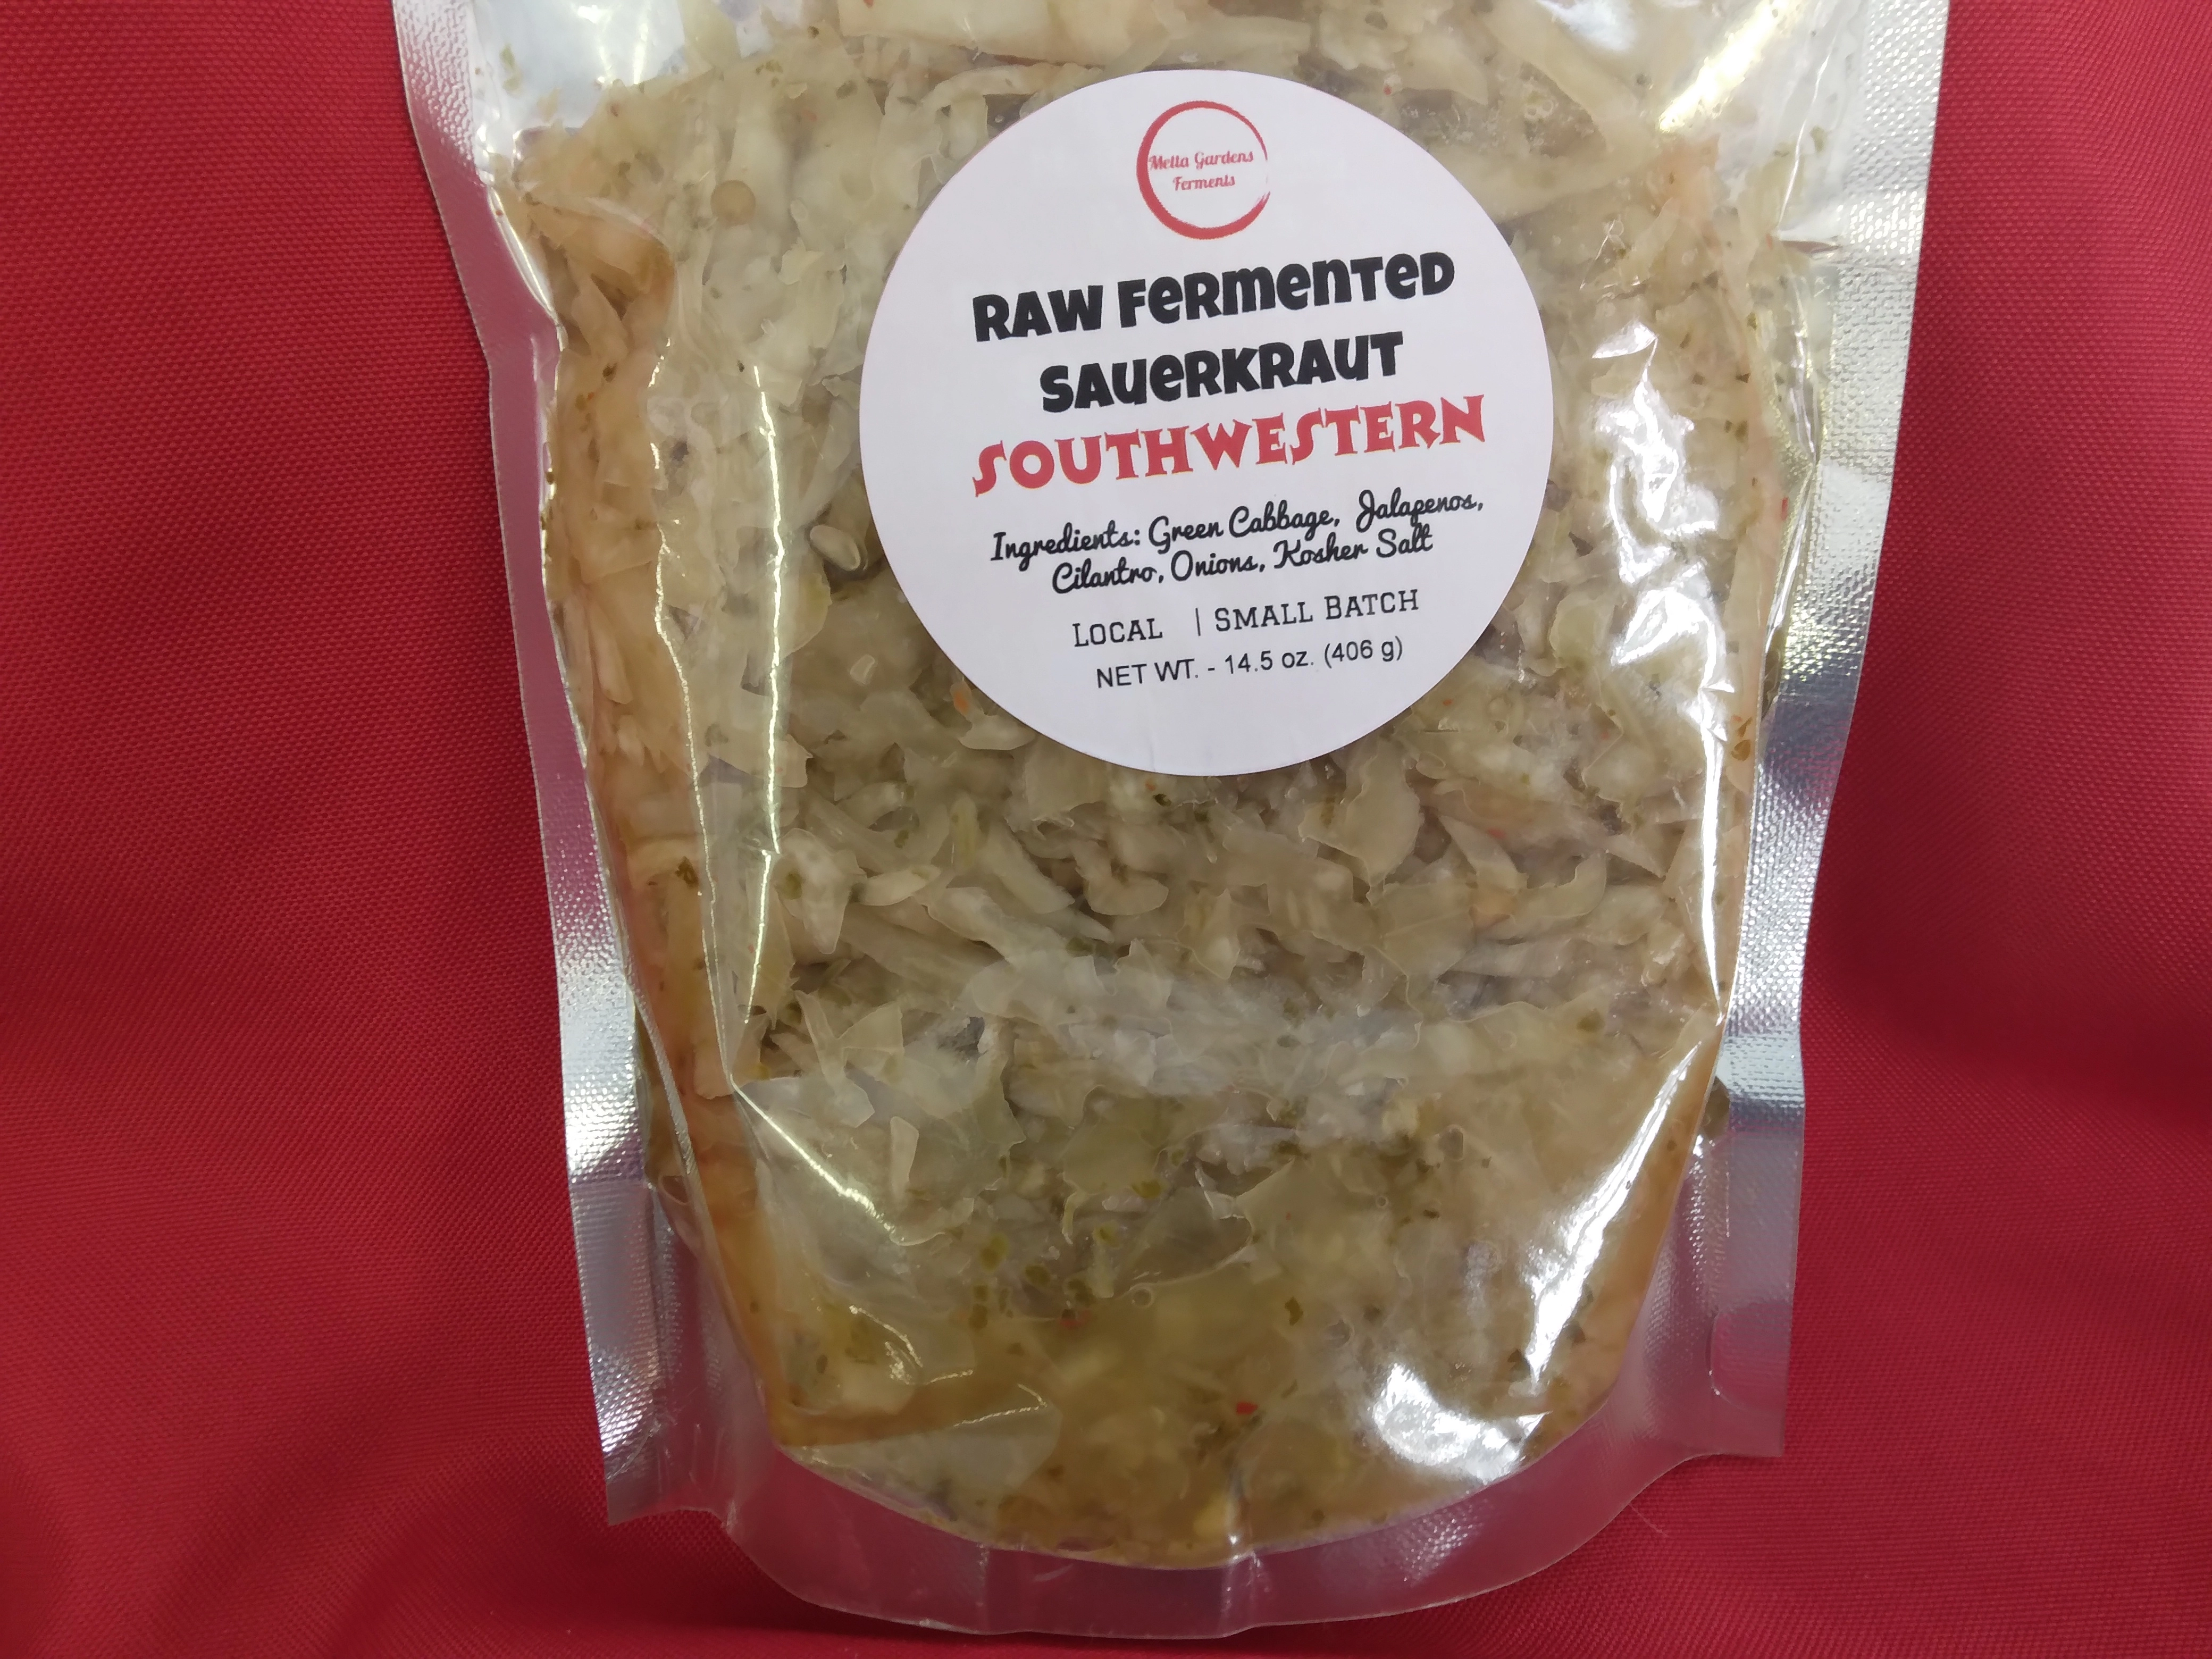 raw-fermented-sauerkraut-southwestern-8-oz